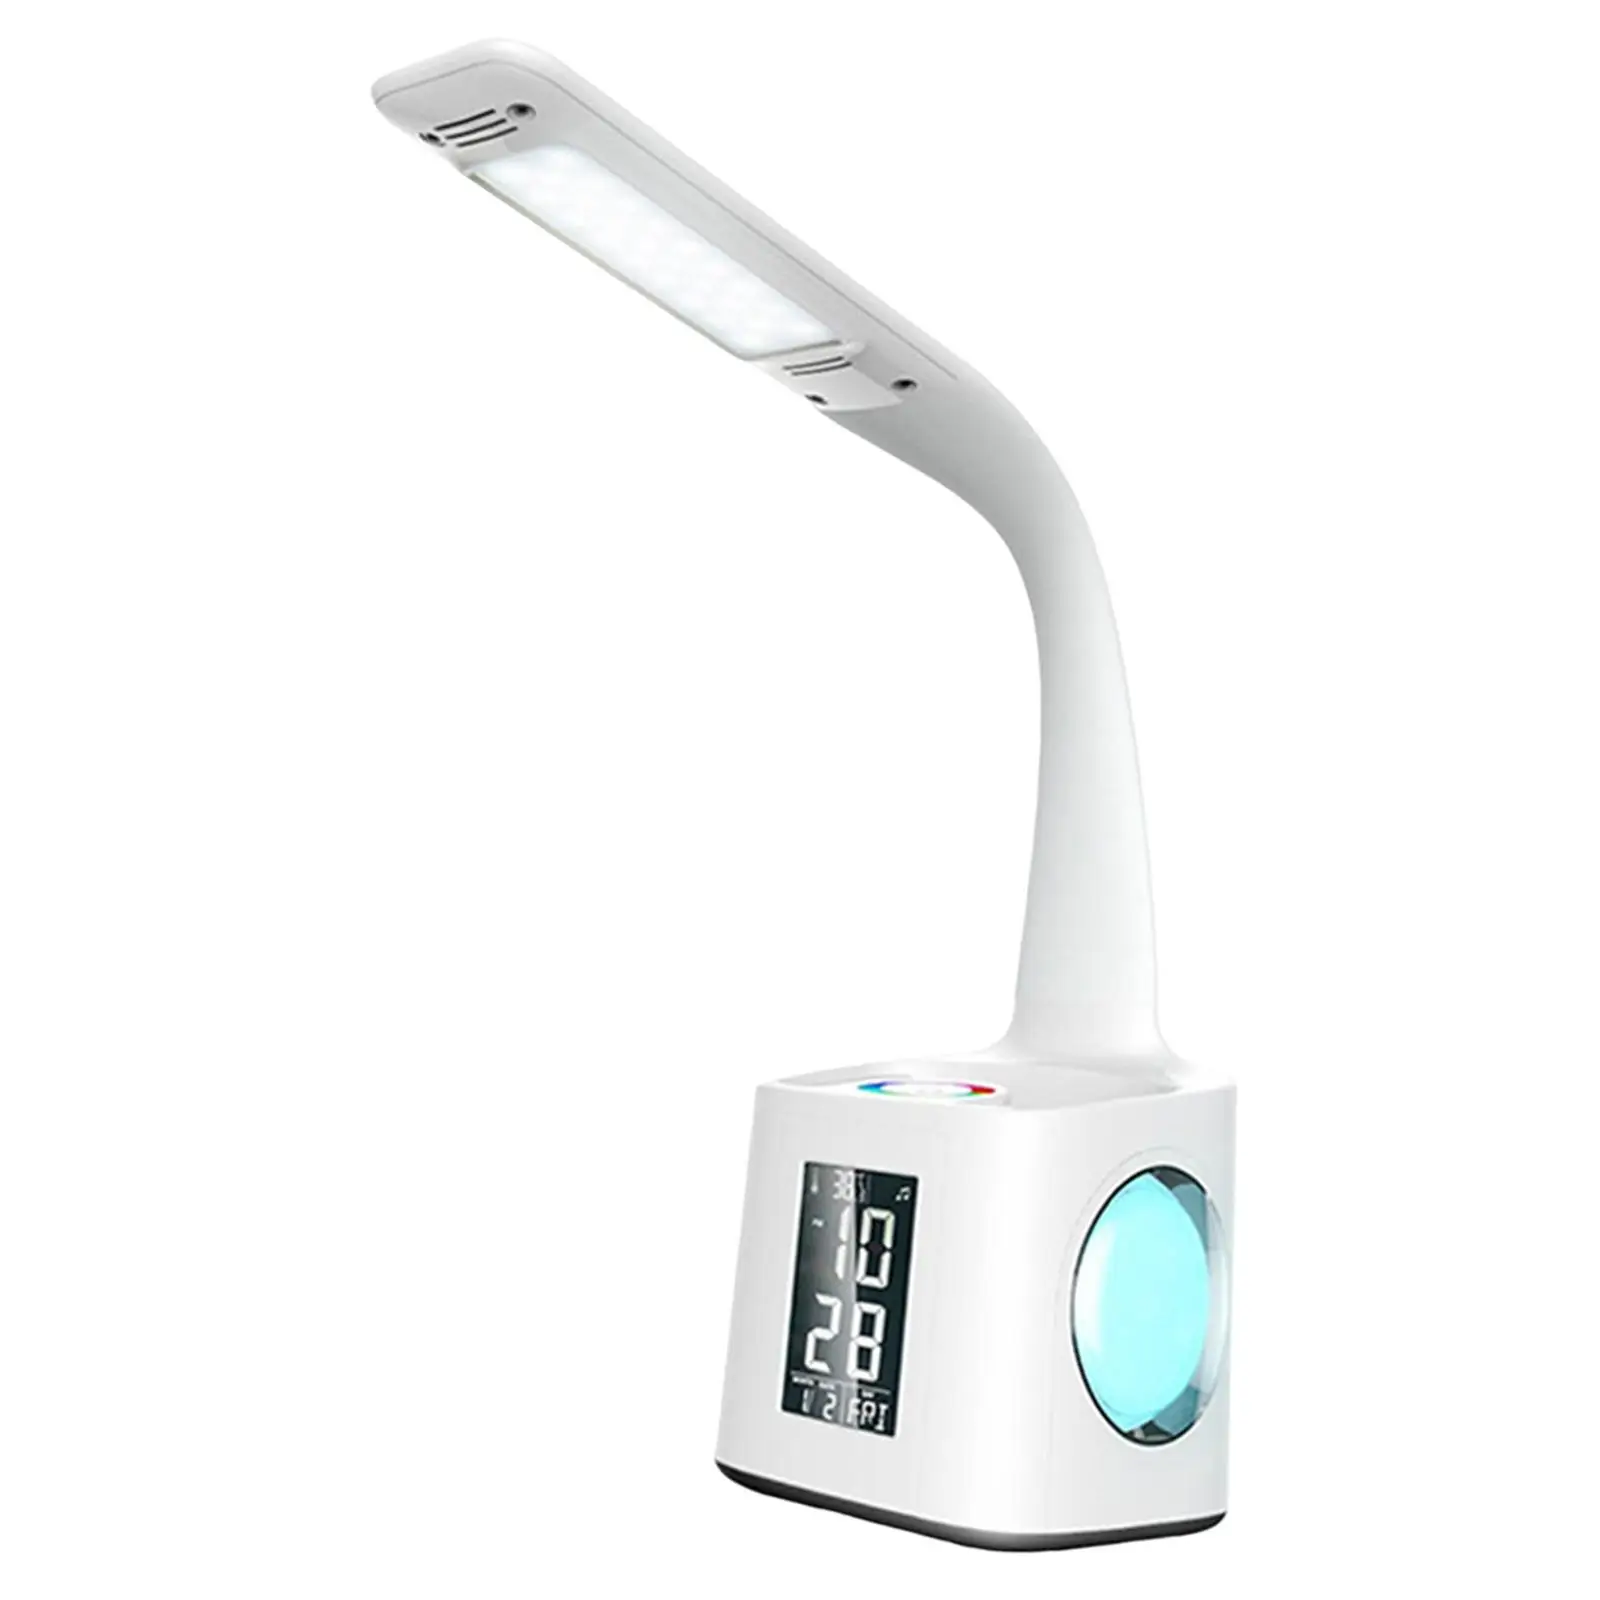 Multifunction Desk Lamp with Pen Holder LED 3 Level Dimmable Desktop Rechargeable Decorative Atmosphere Light for Bedside Study